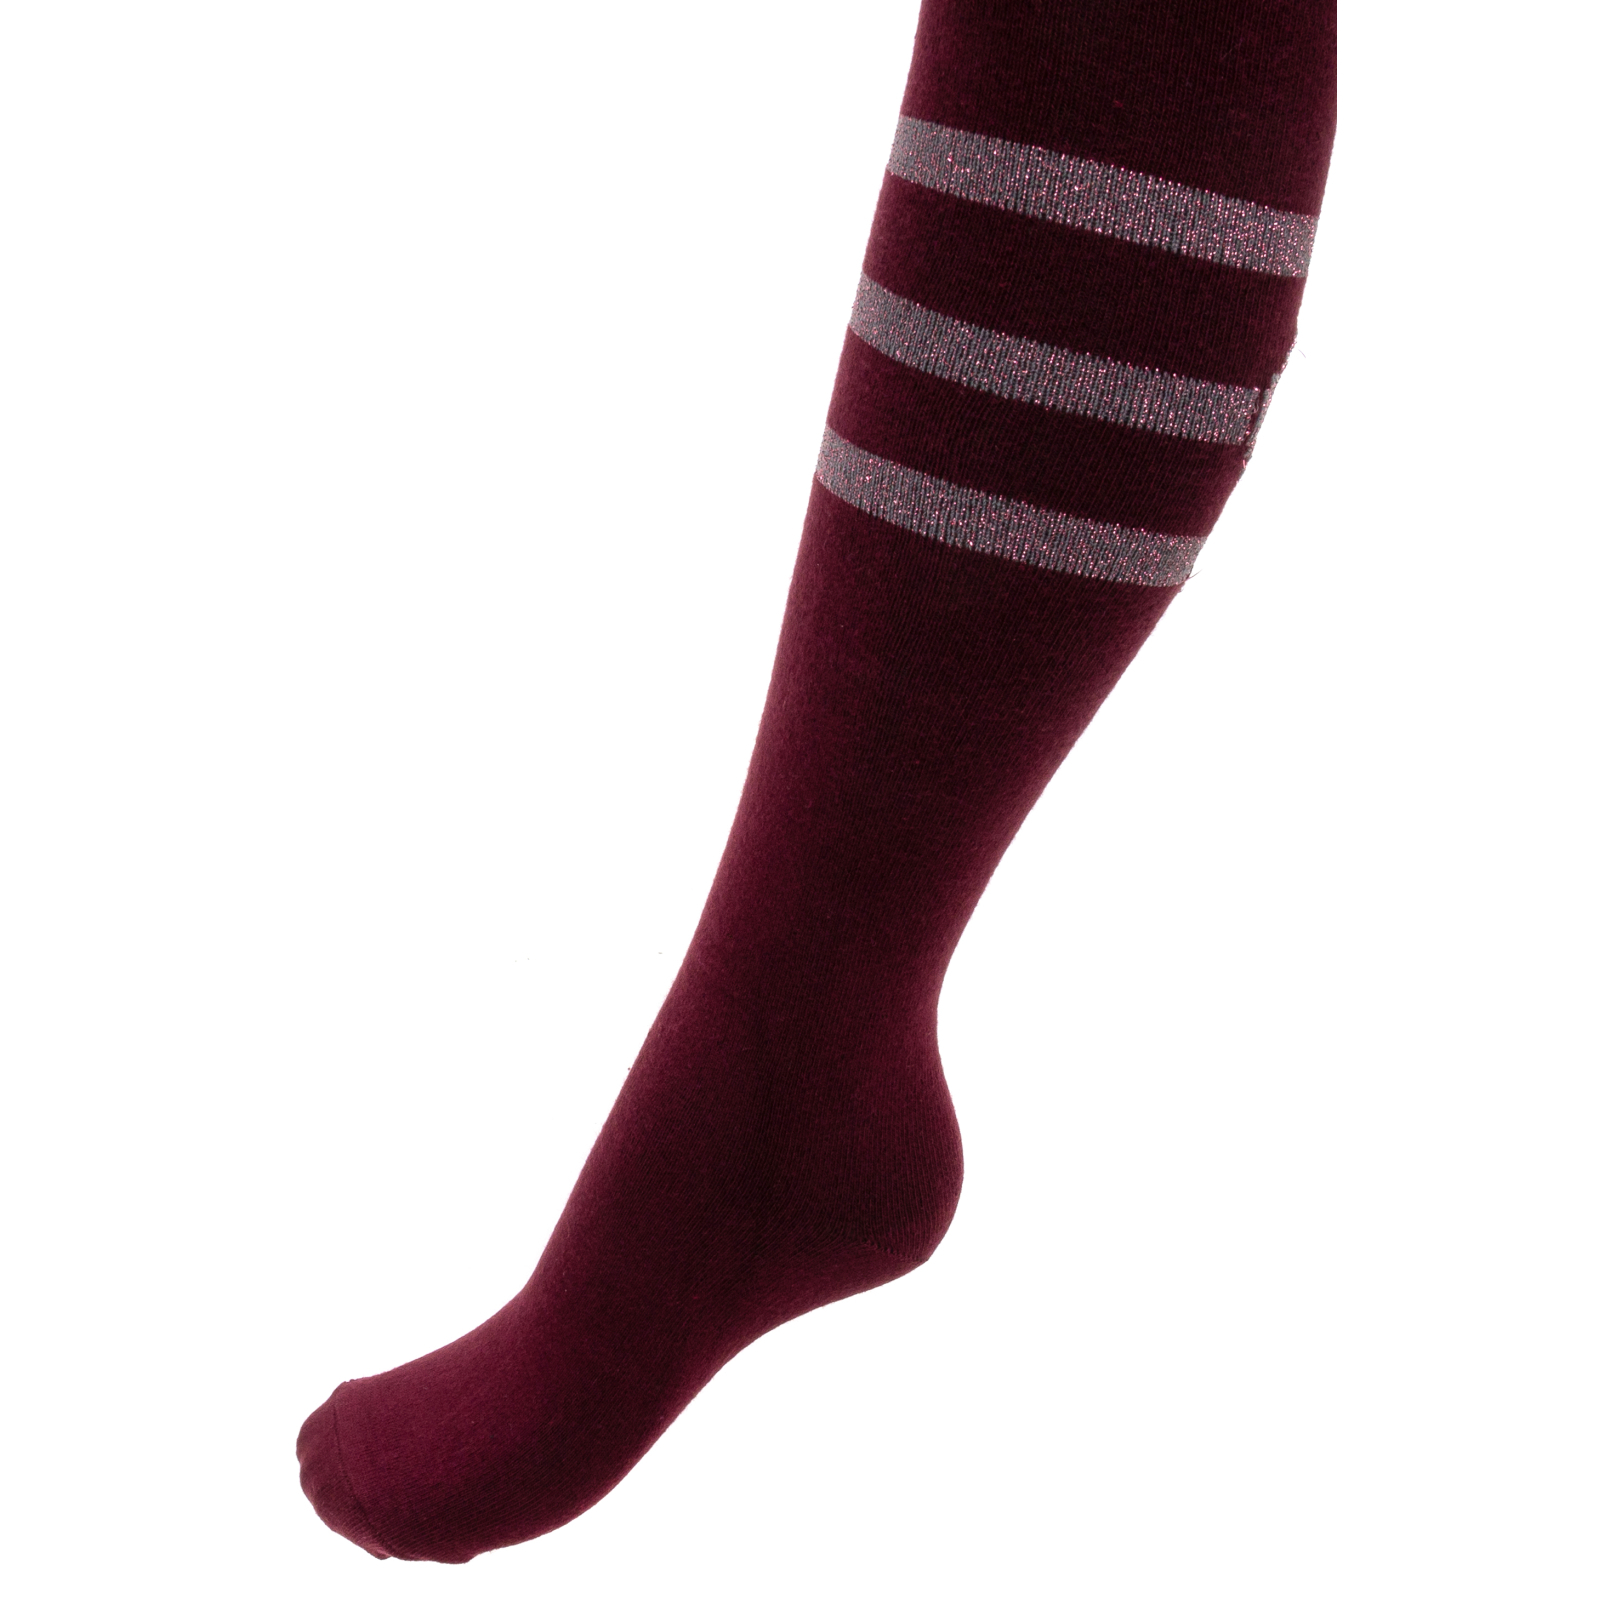 Колготки UCS Socks с бантом (M0C0301-1410-5G-darkblue)